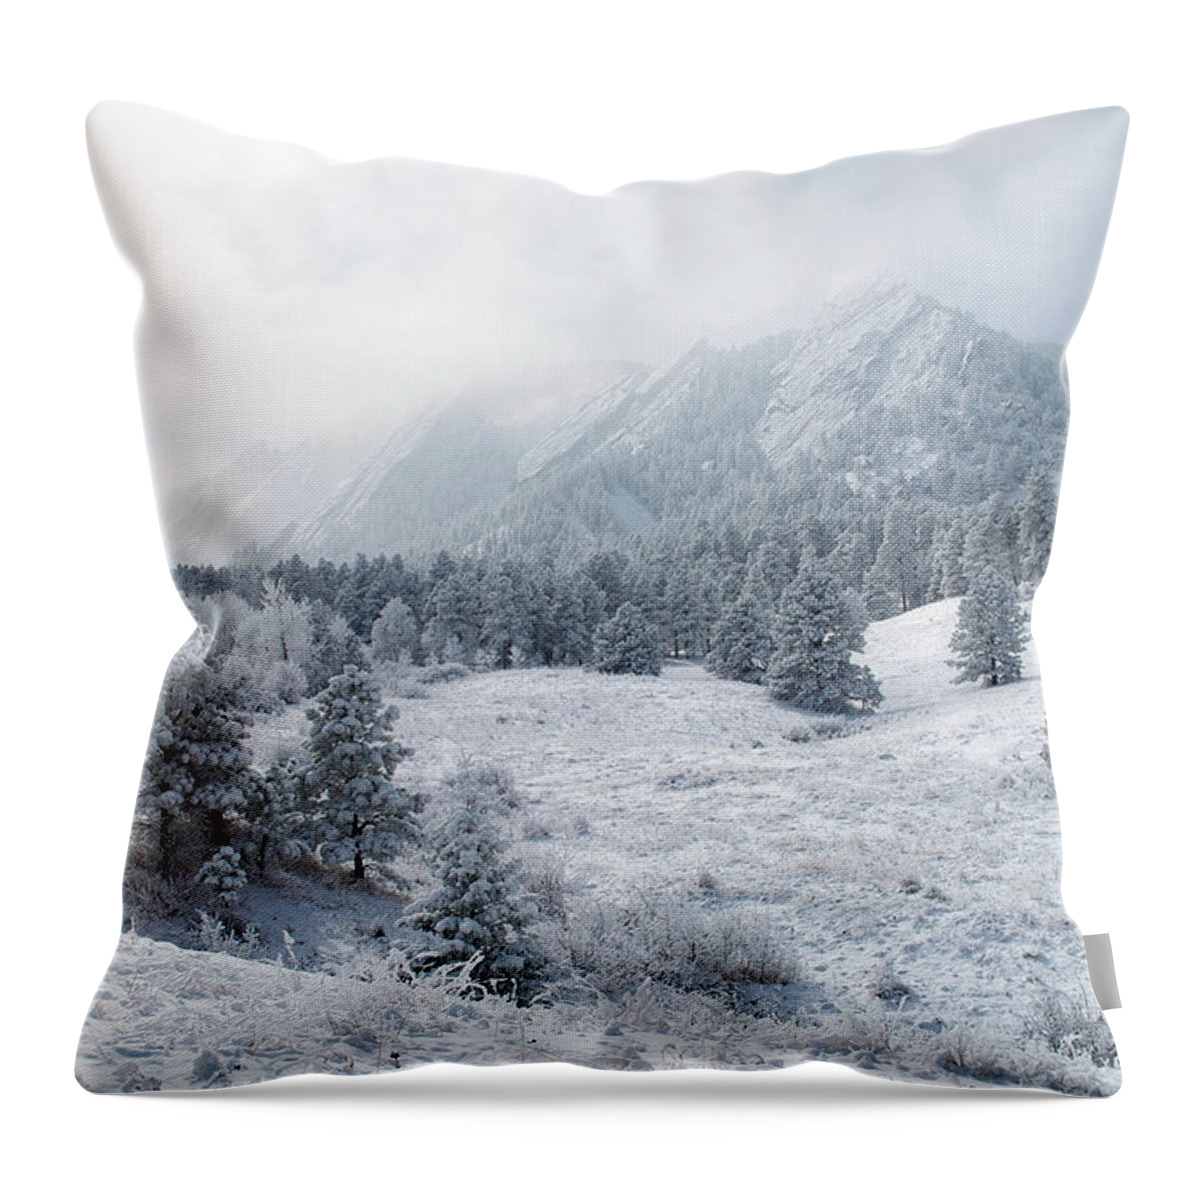 Flatirons Throw Pillow featuring the photograph Winter Flatirons 2 by Aaron Spong